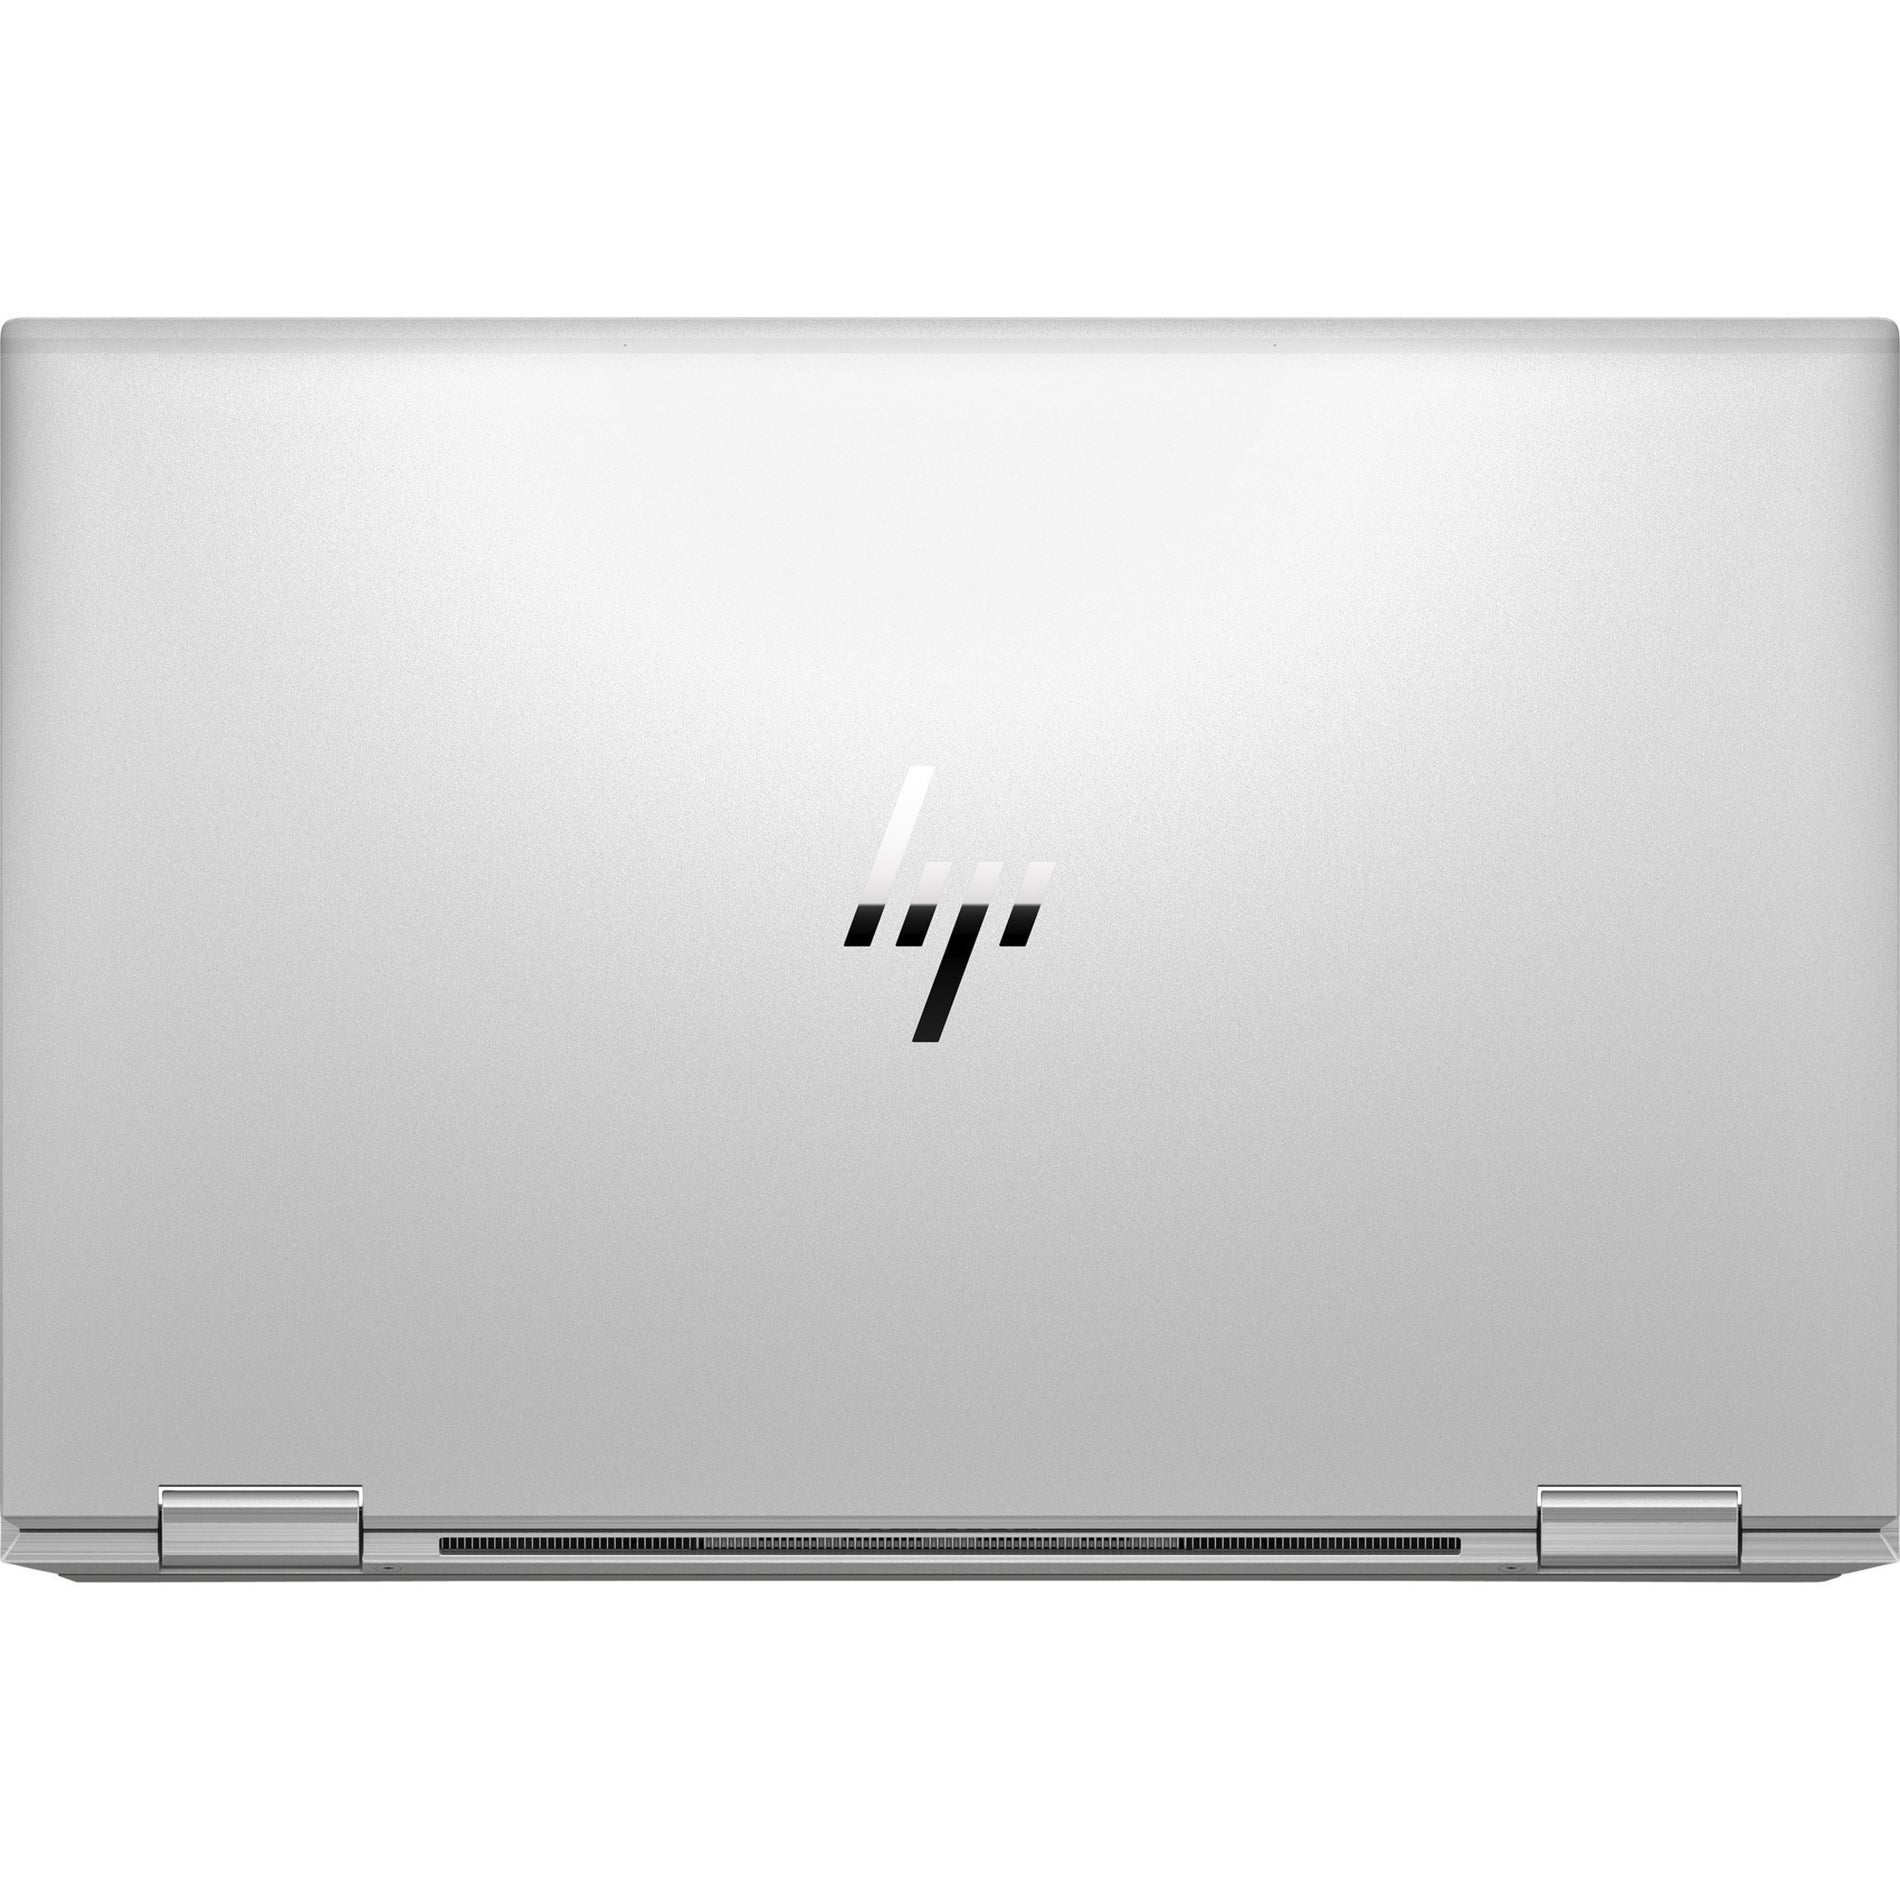 HP EliteBook x360 1040 G8 LTE Advanced 14" Touchscreen Convertible 2 in 1 Notebook, Intel Core i7 11th Gen, 16GB RAM, 512GB SSD